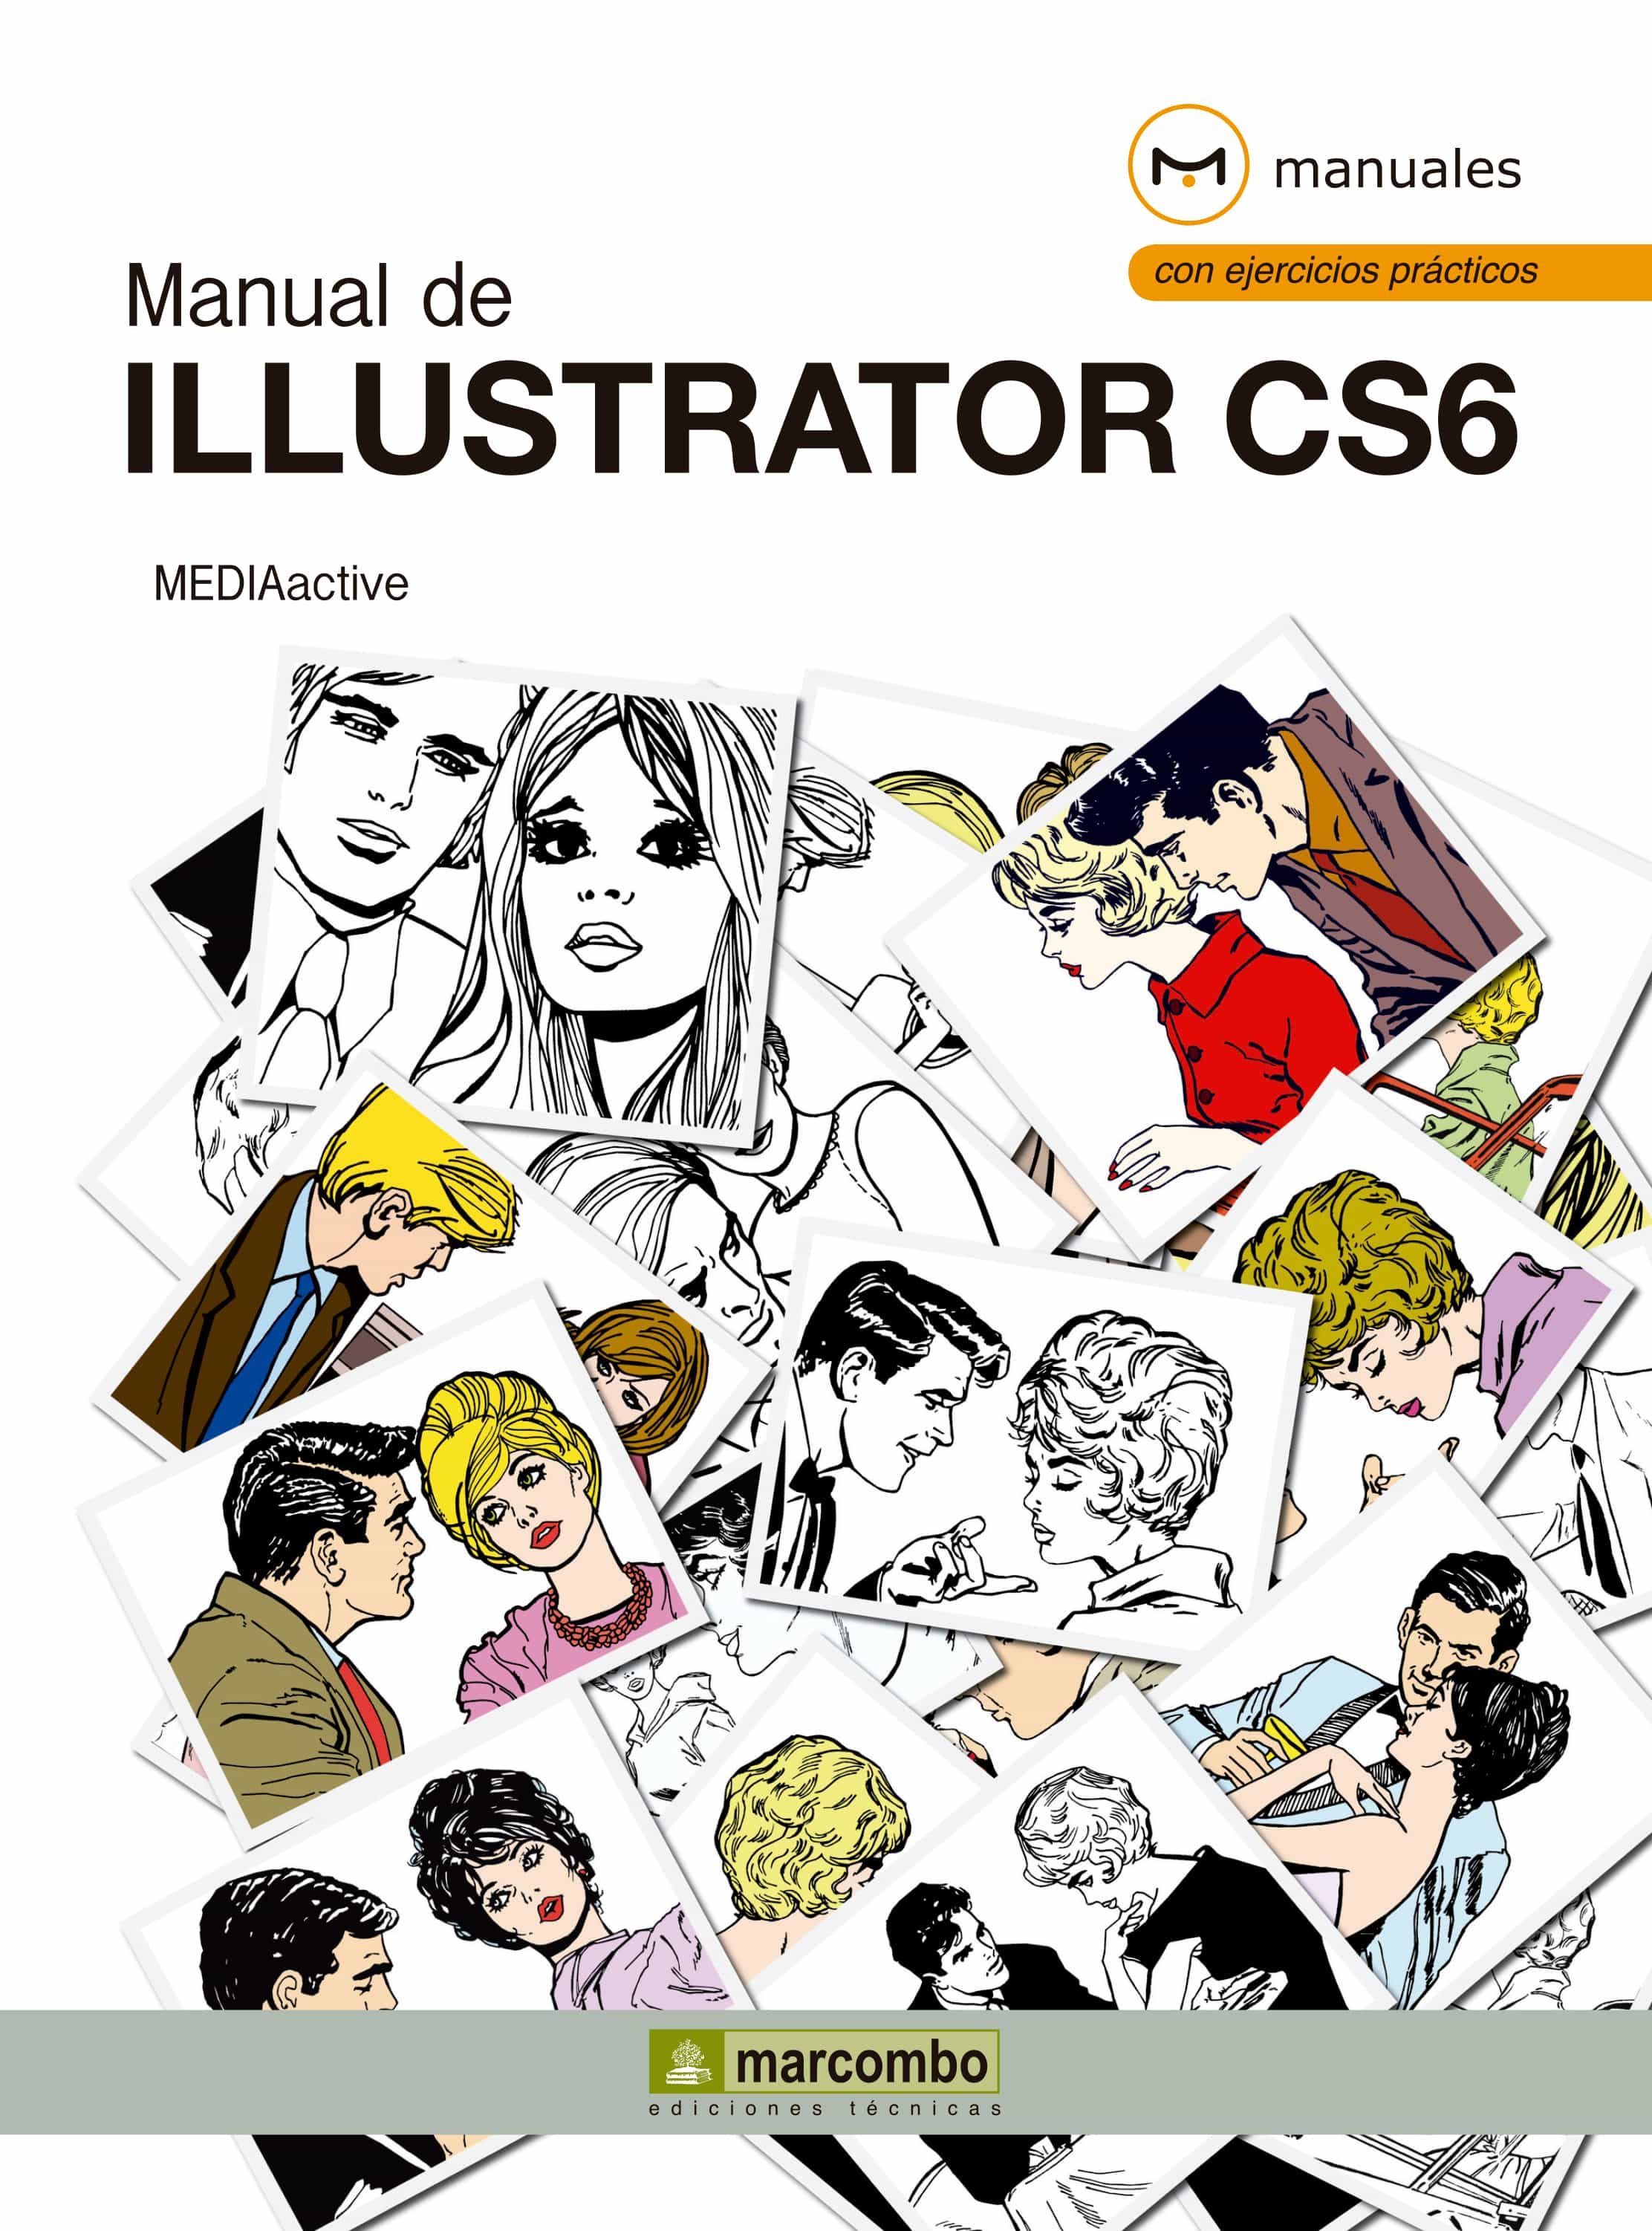 adobe illustrator cs6 manual free download